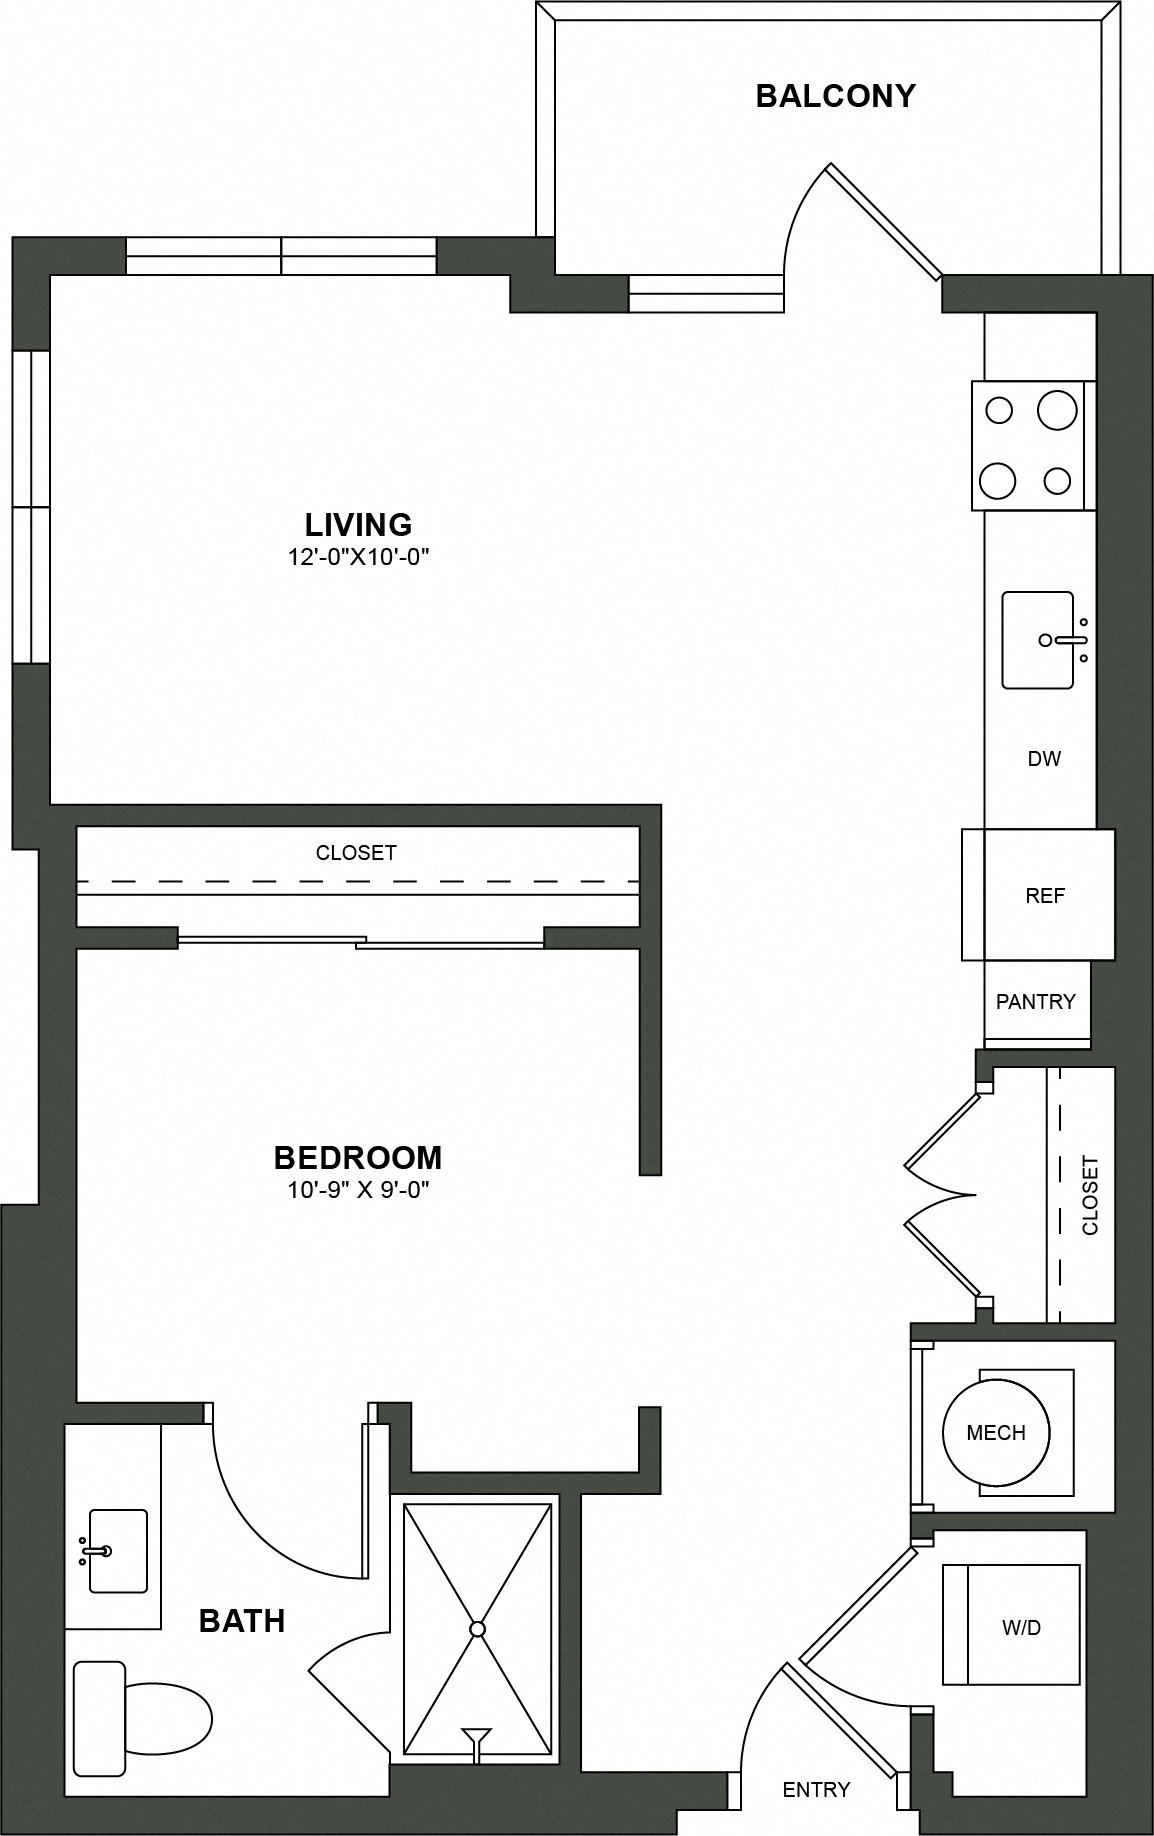 S4 Floorplan Image